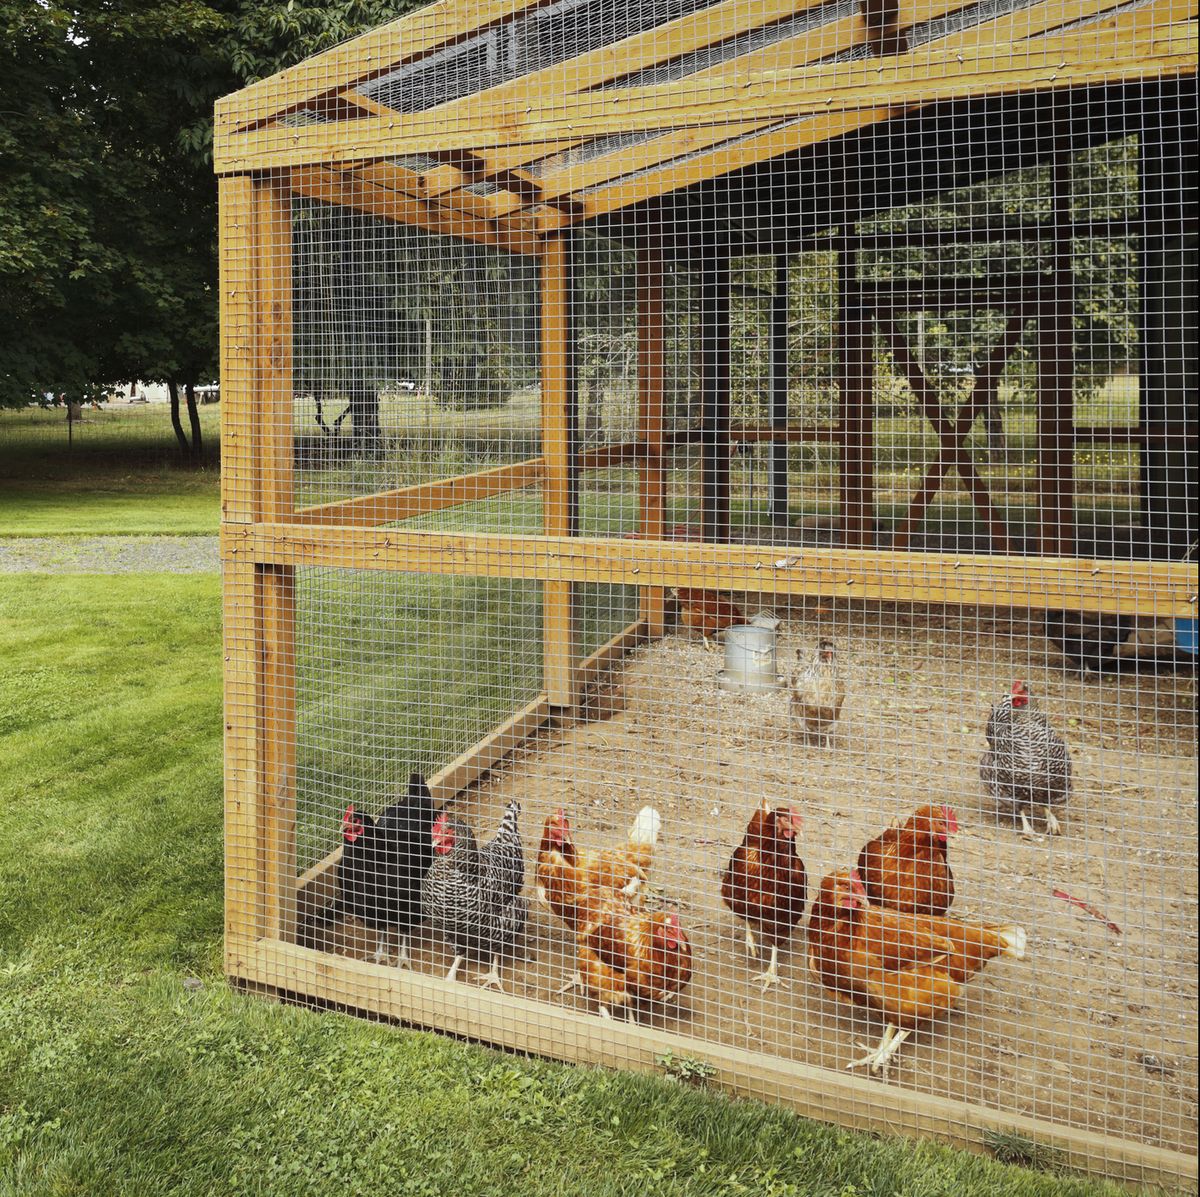 Cage, Chicken coop, Animal shelter, Backyard, Grass, Bird, Kennel, Chicken, Pet supply, Agriculture, 